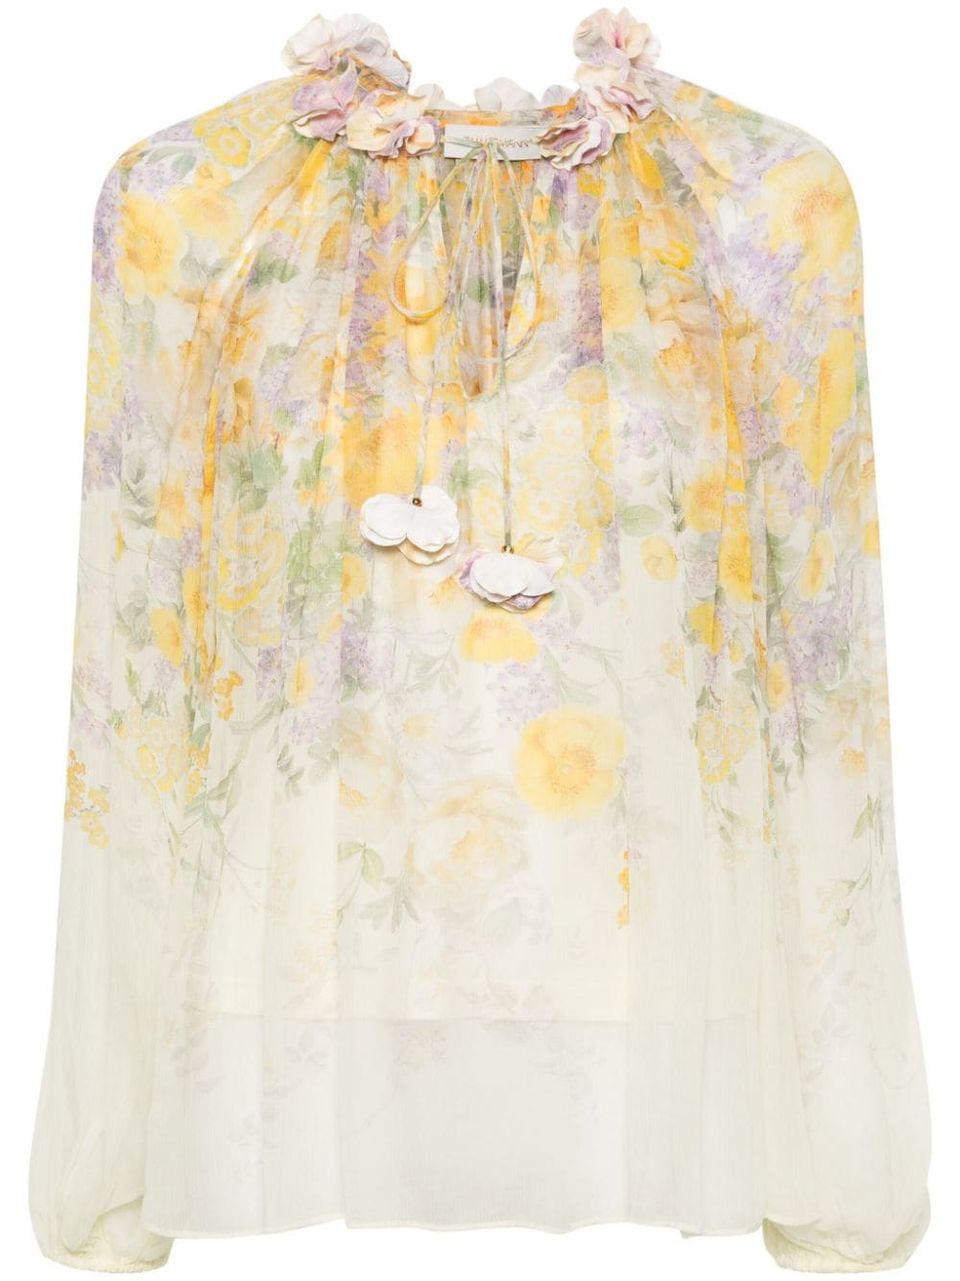 Harmony Billow blouse with Citrus Garden print